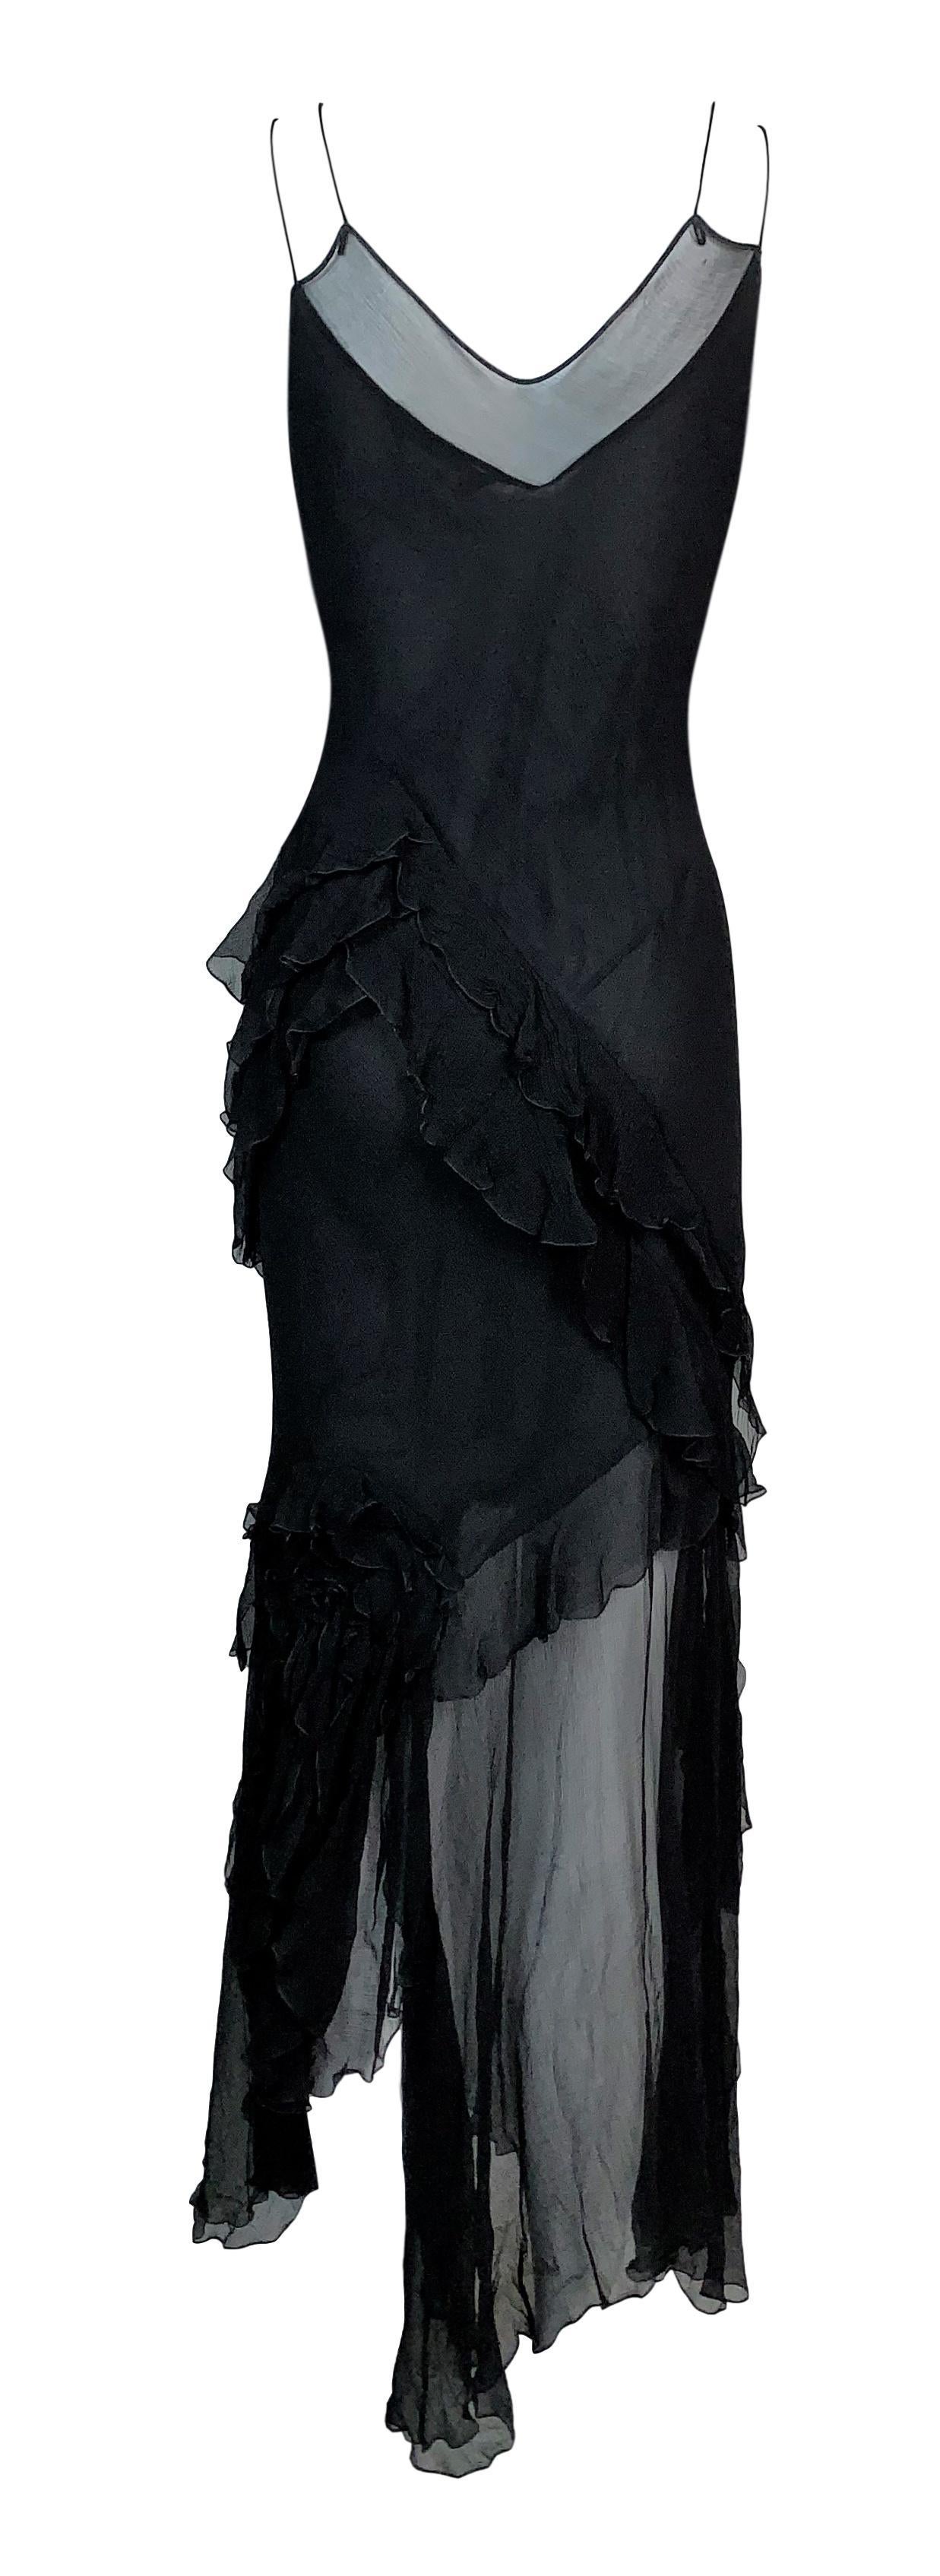 f/w 2000 christian dior john galliano sheer black lace panel dress